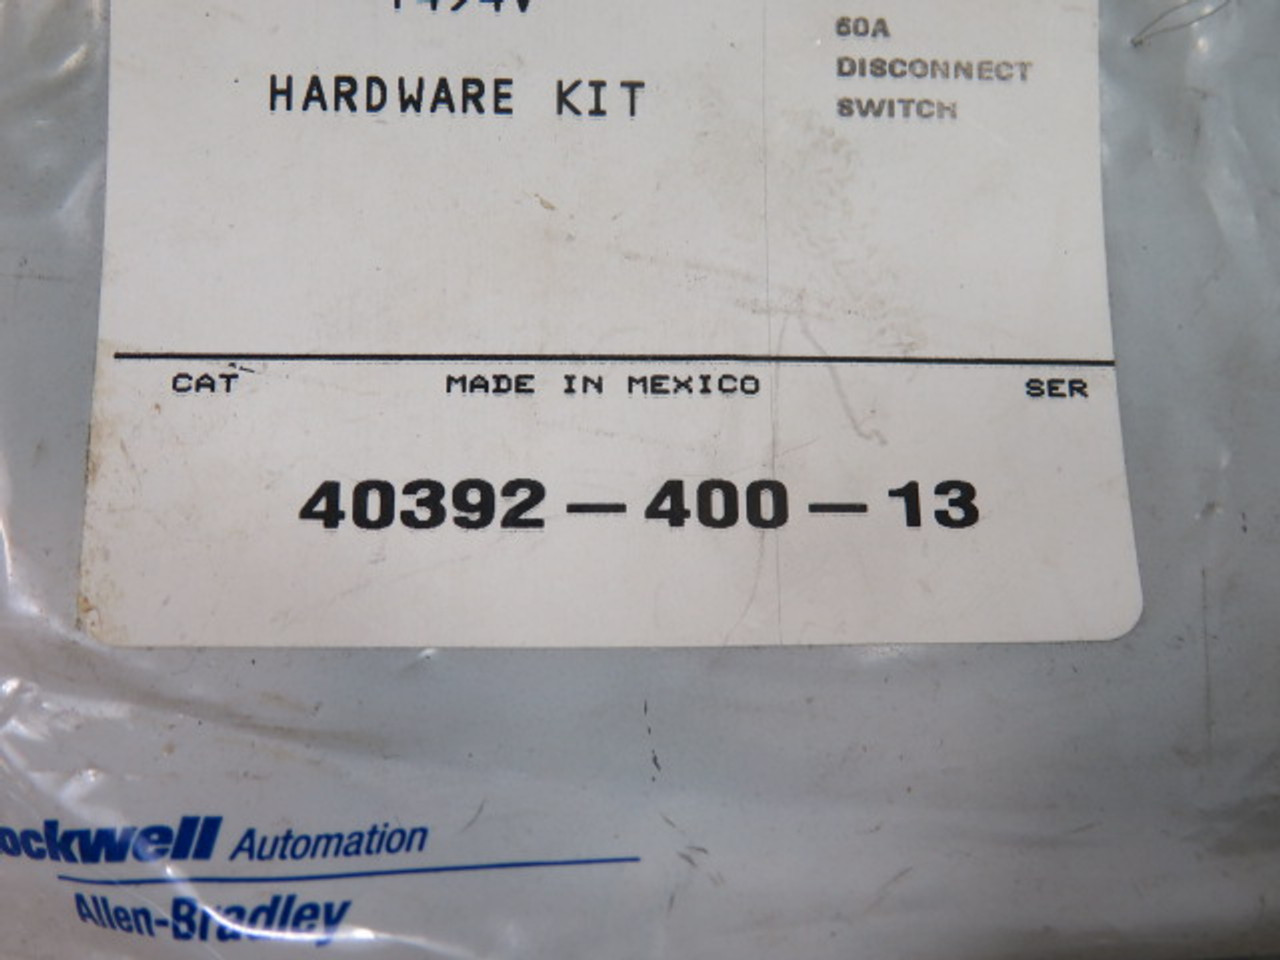 Allen-Bradley 40392-400-13 Hardware Kit for 1494V 60A Disconnect Switch ! NWB !